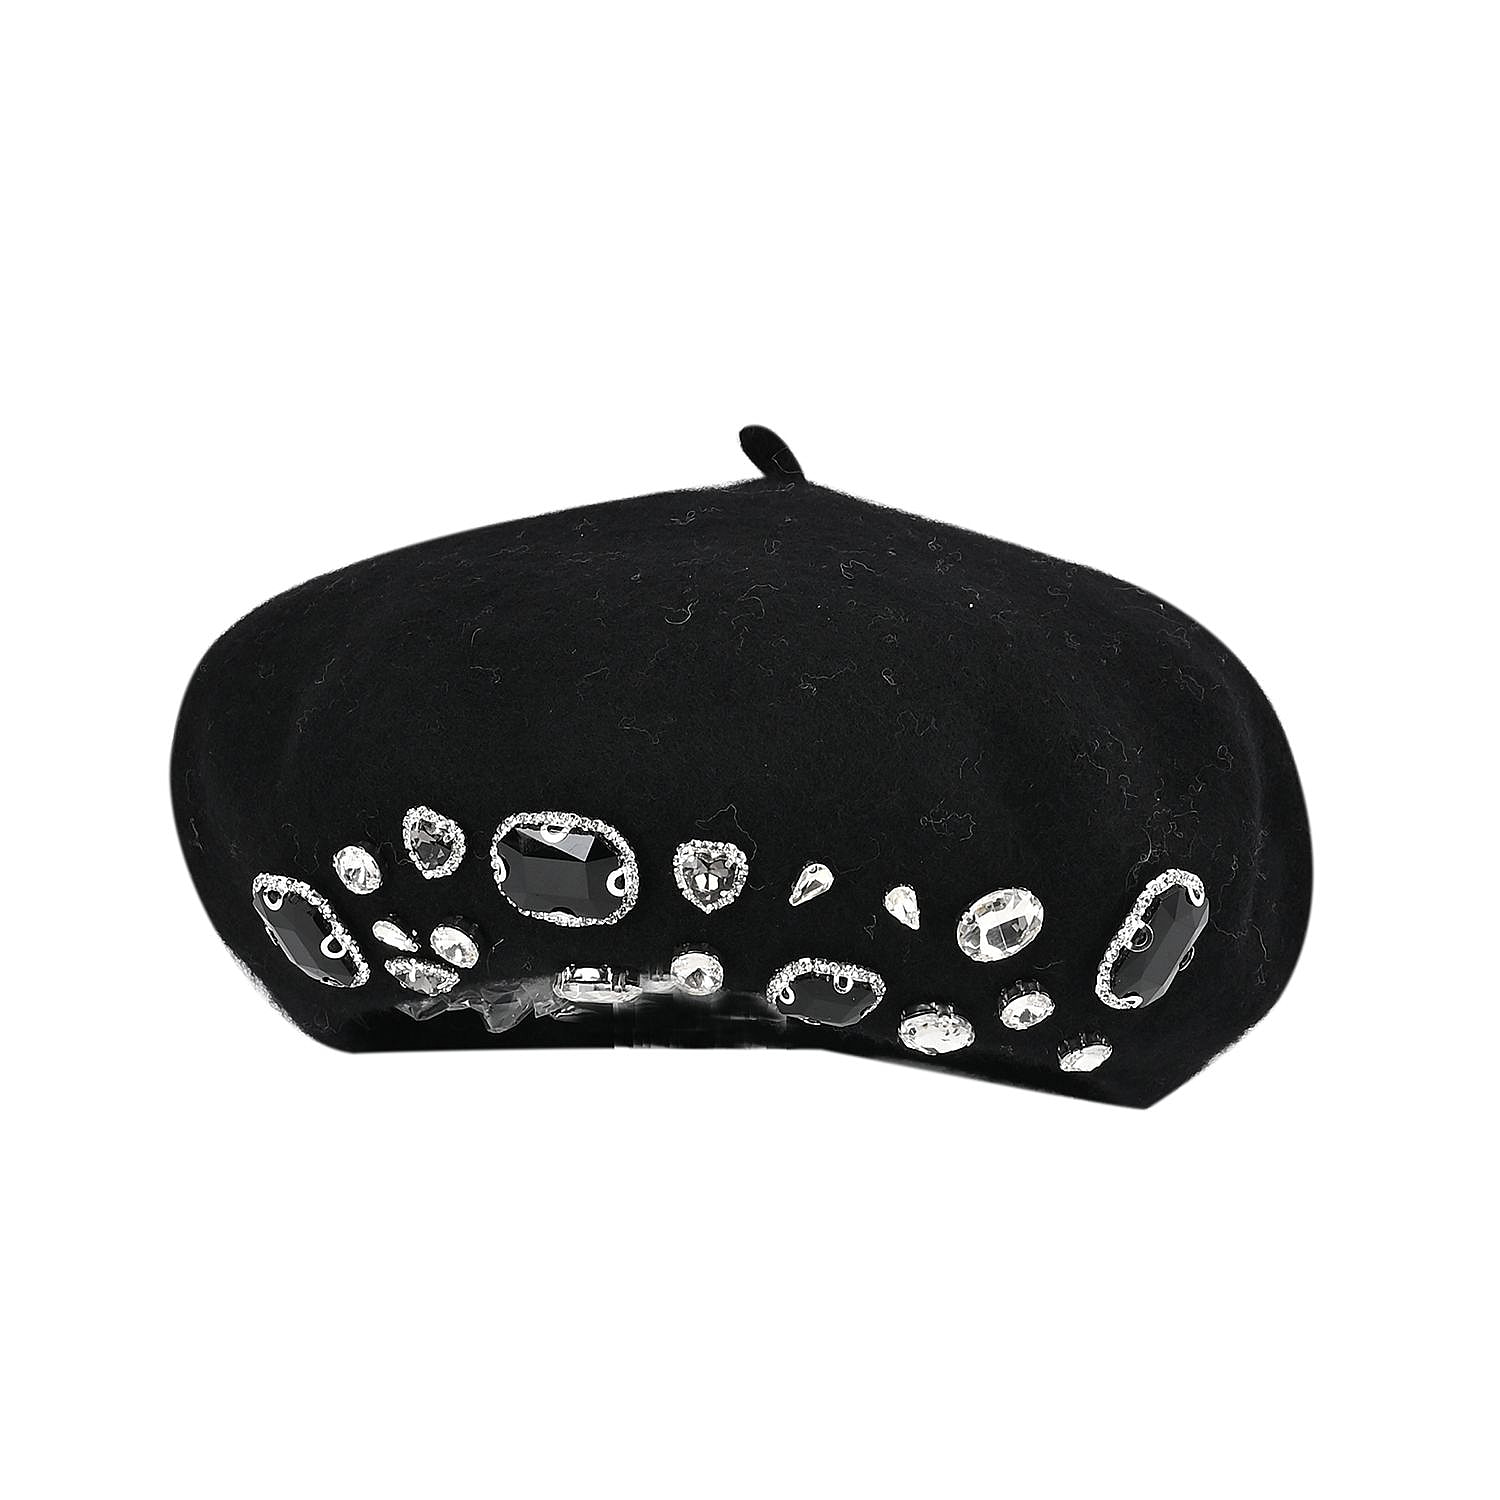 Wool-Patterned-Hat-Cap-and-Earmuff-Size-53x5-cm-Black-Black